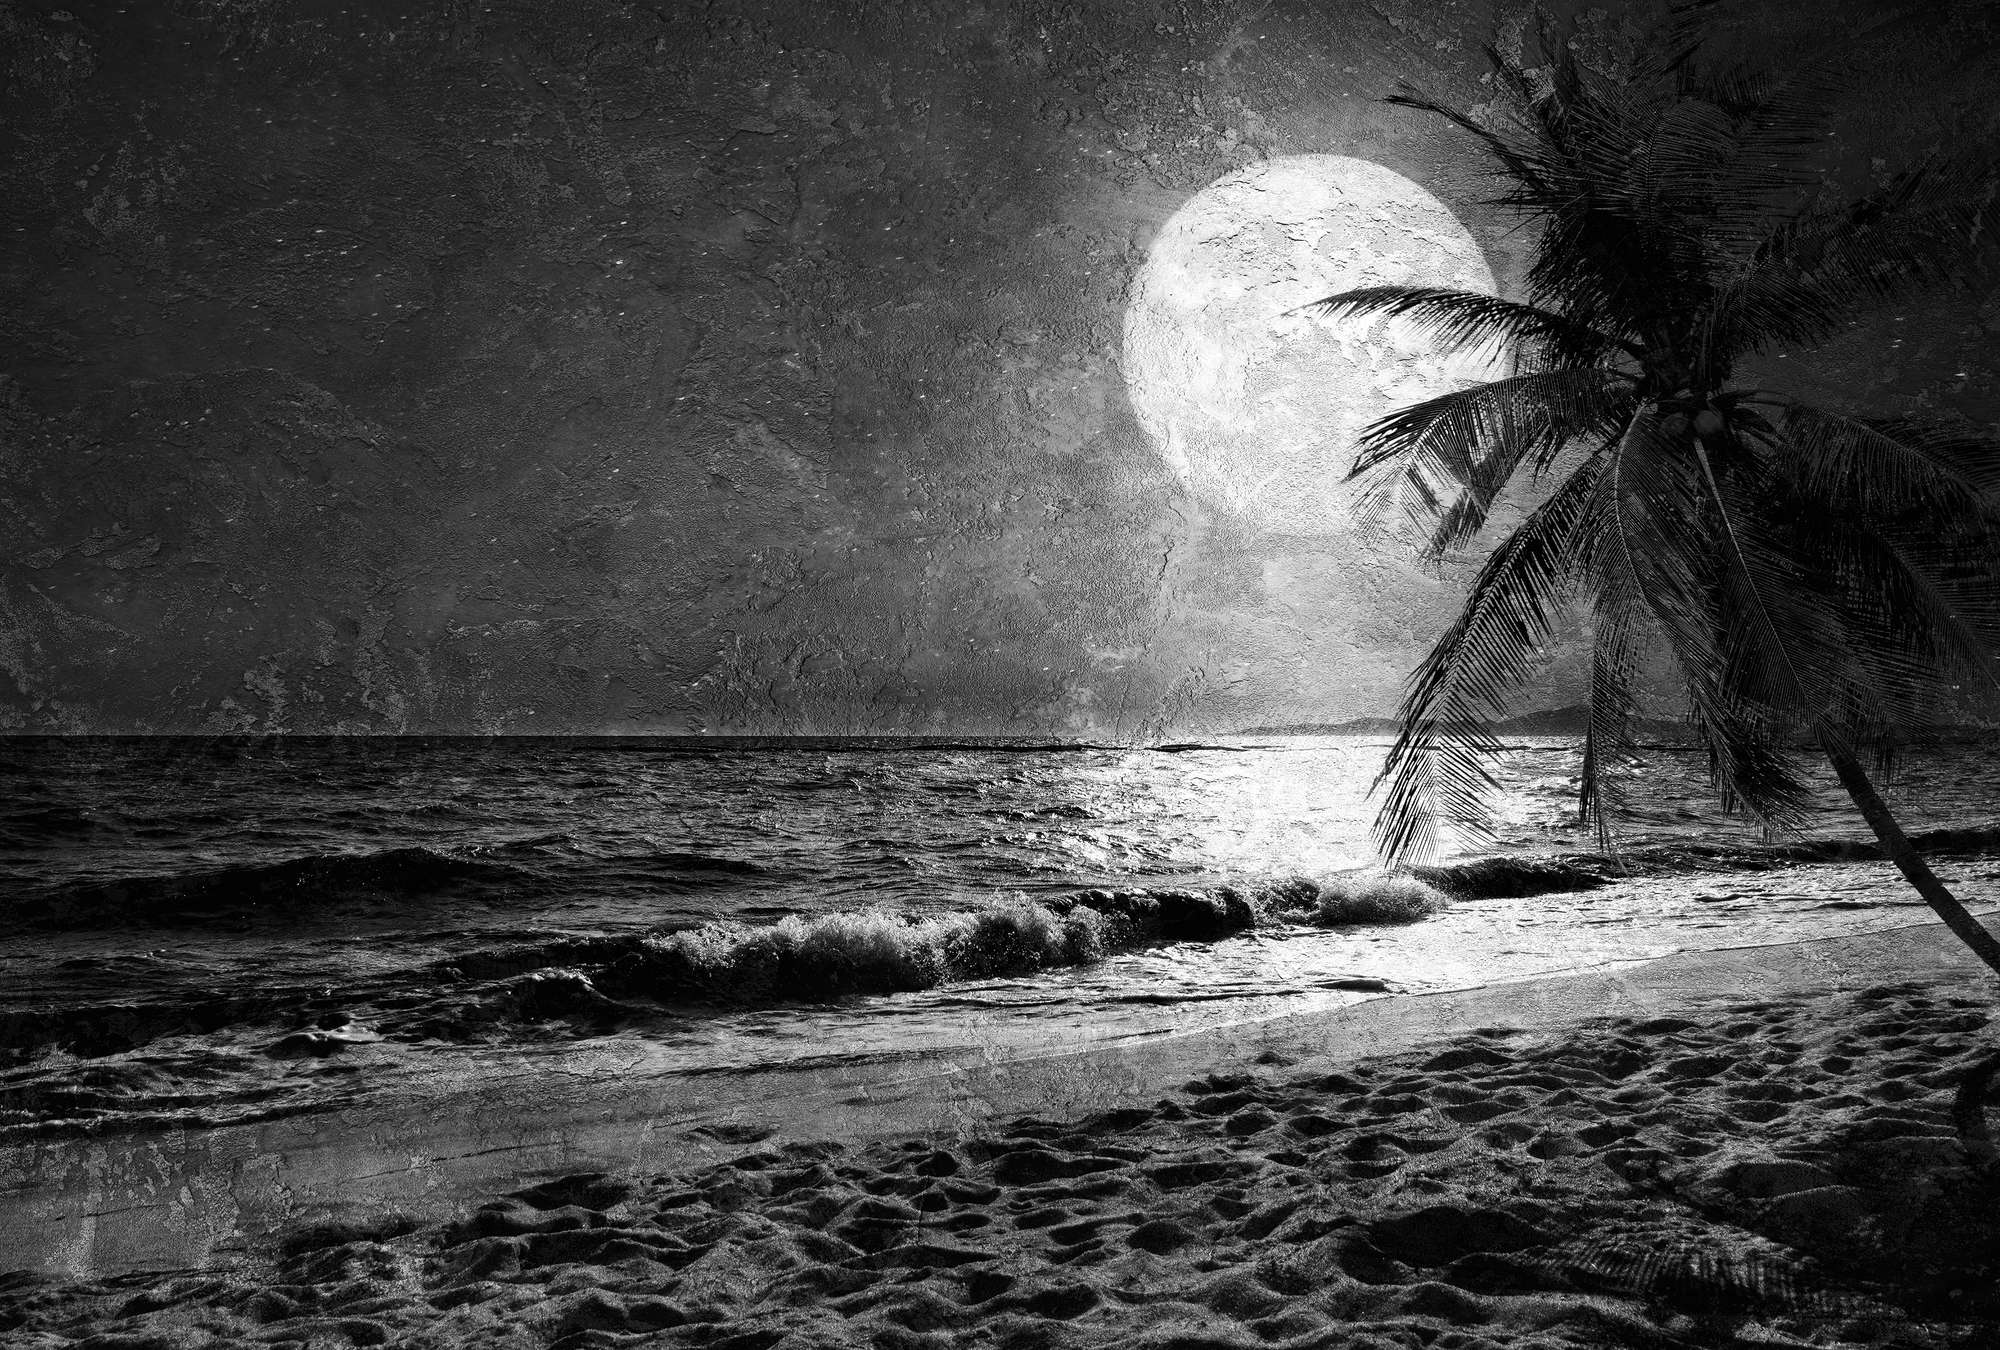             Sea & beach mural with palm trees & moon - white, grey, black
        